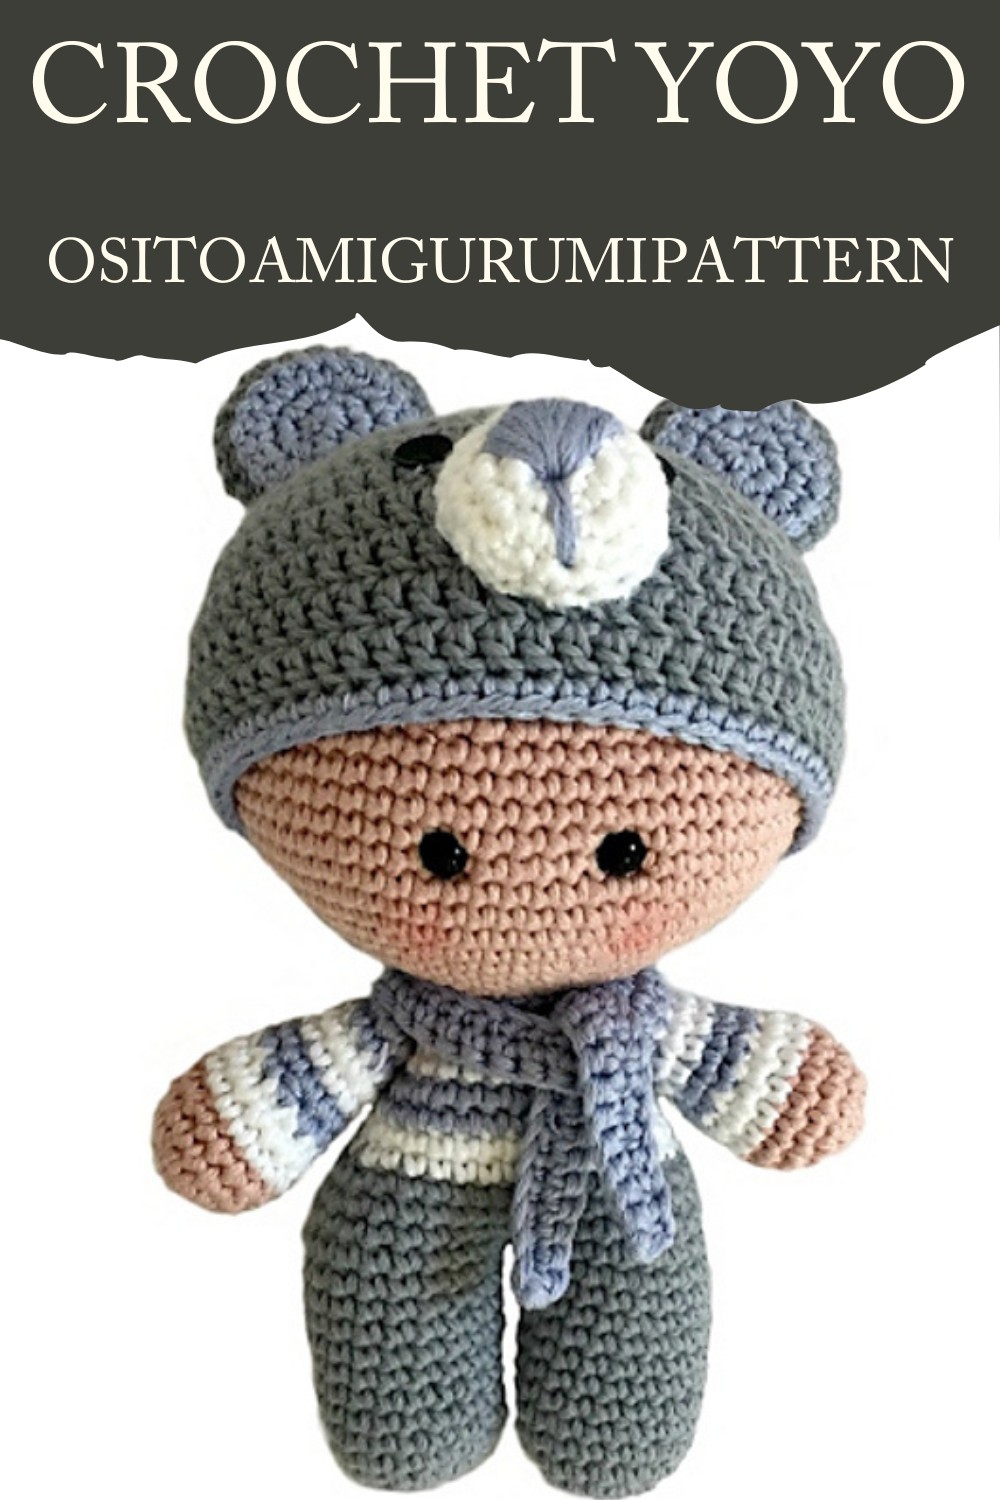 Crochet Yoyo Osito Amigurumi Pattern